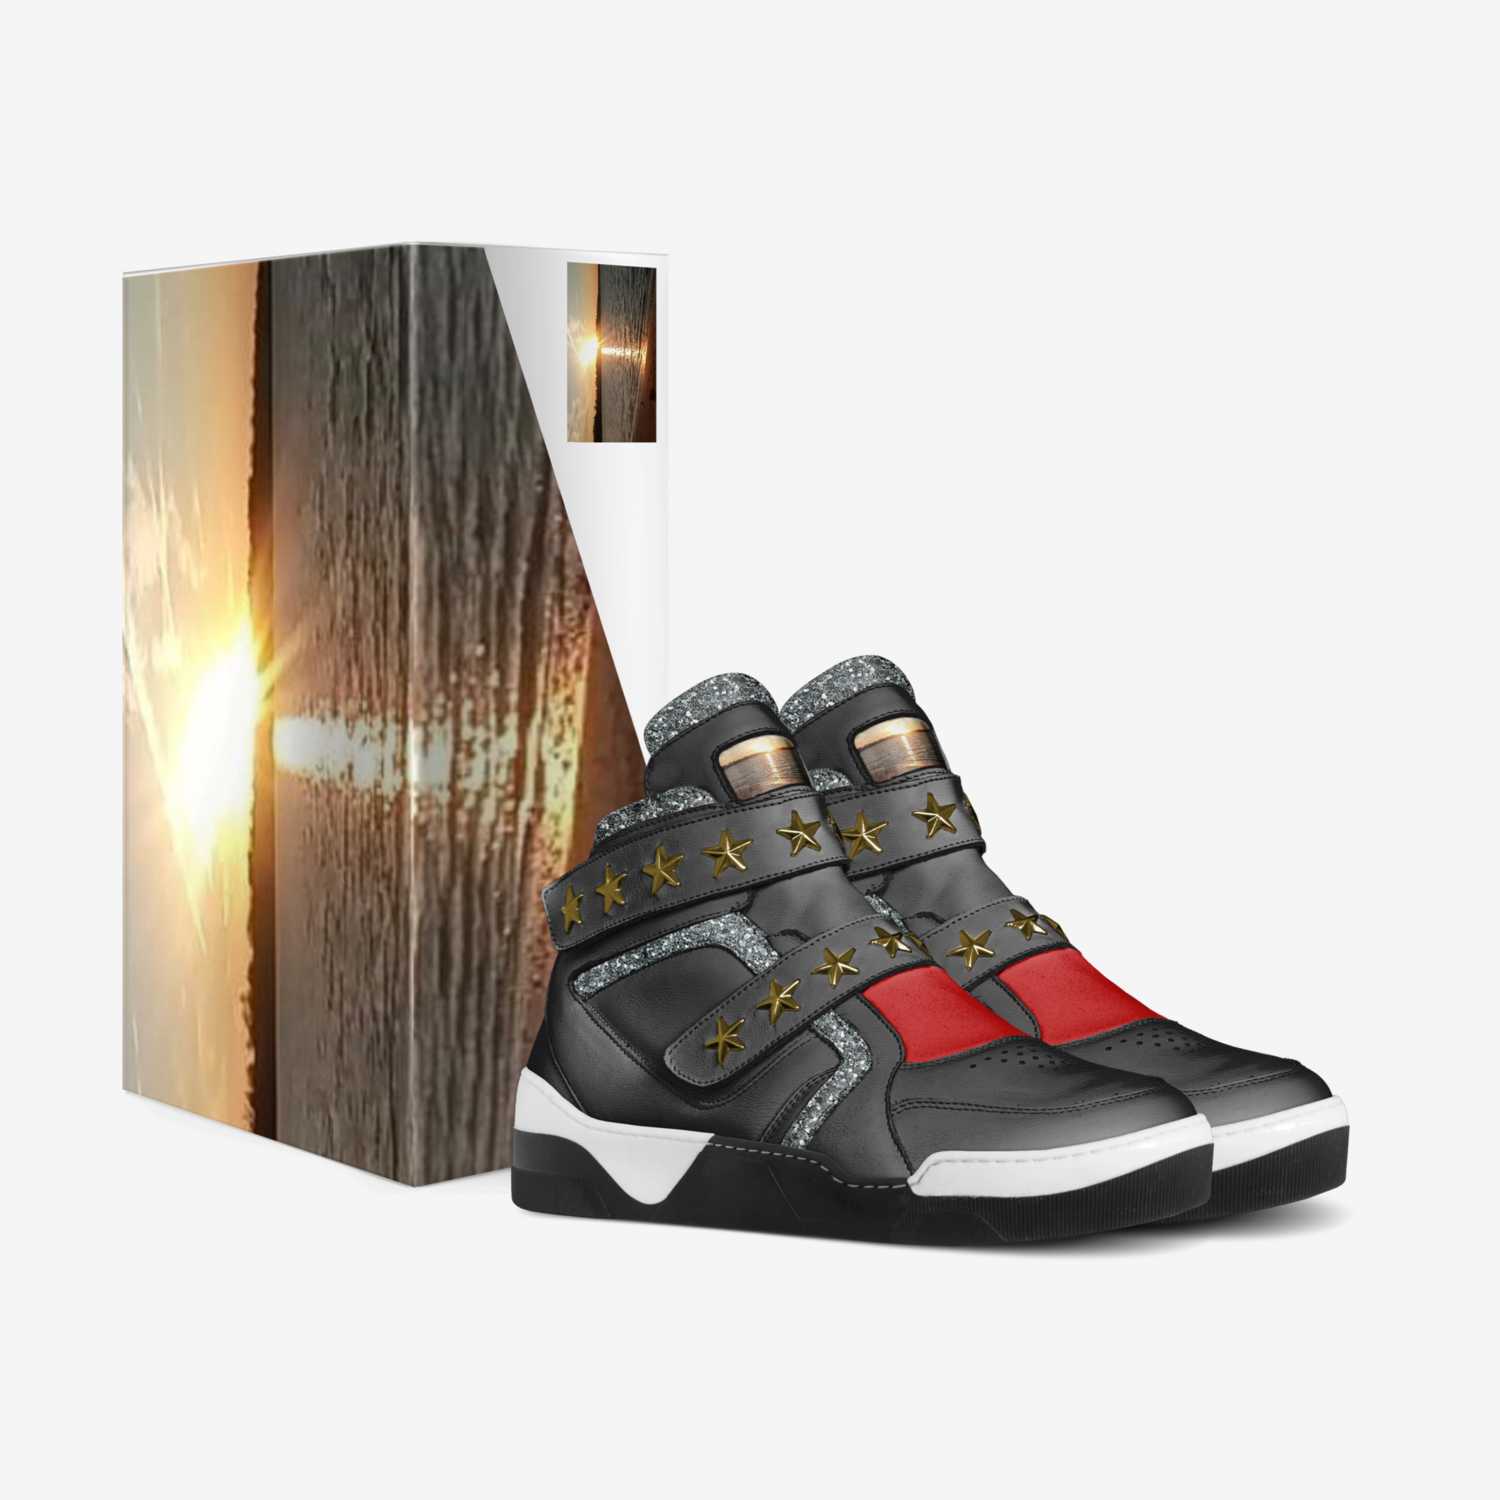 DA Christ77S custom made in Italy shoes by Cedric Harris | Box view